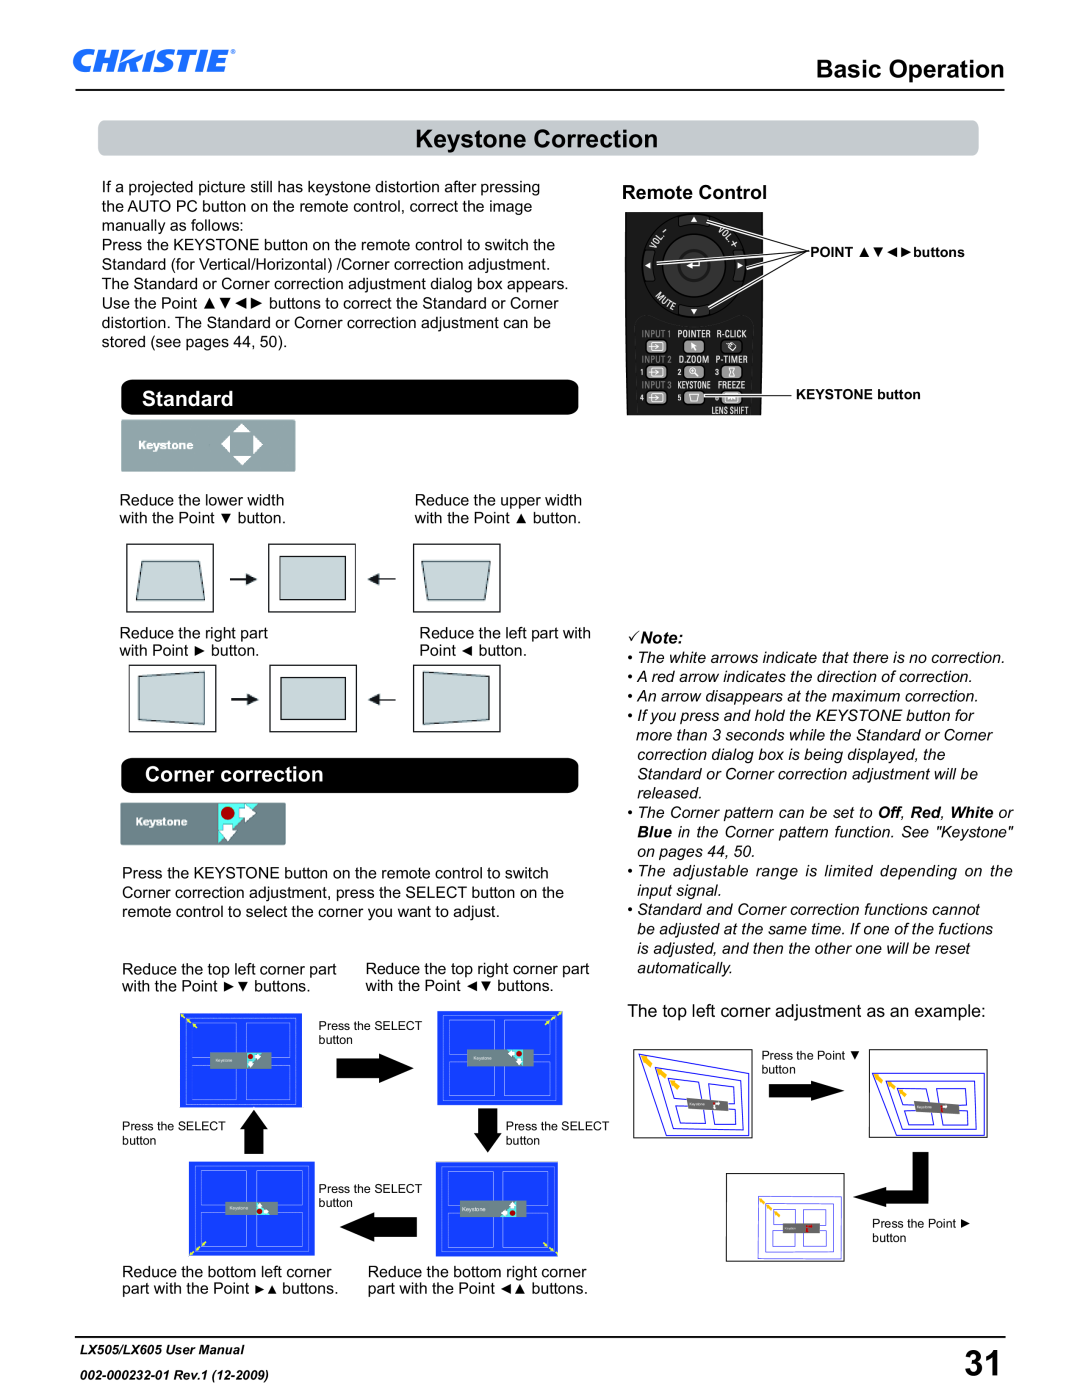 Christie Digital Systems LX605 manual Basic Operation Keystone Correction, Standard, Corner correction, Remote Control 